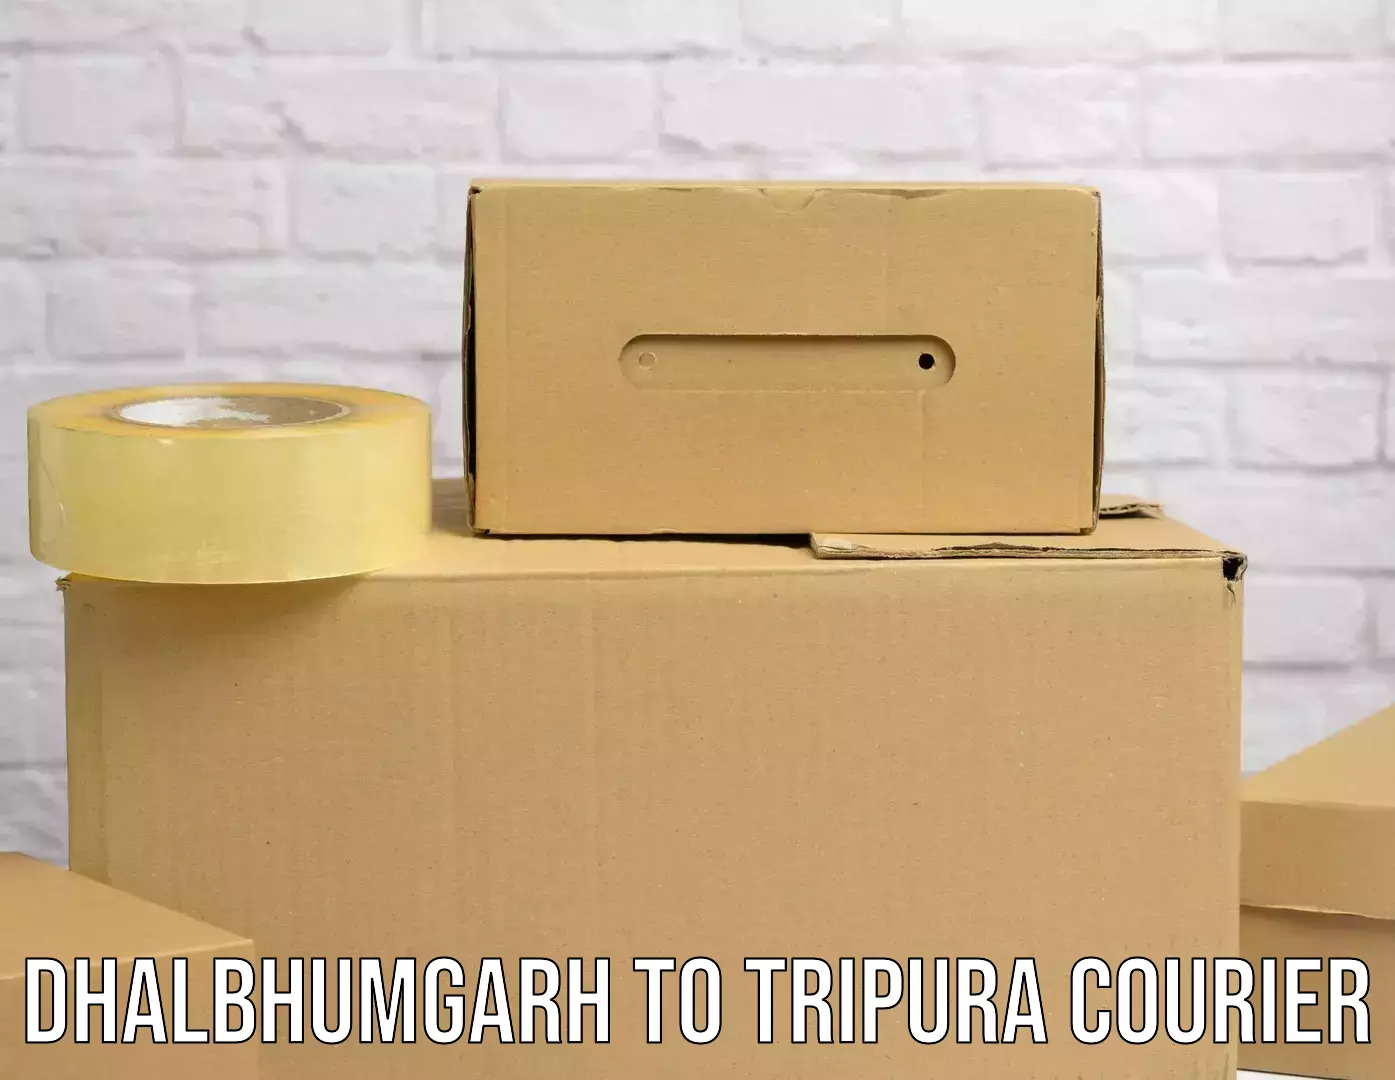 Courier service comparison Dhalbhumgarh to Tripura